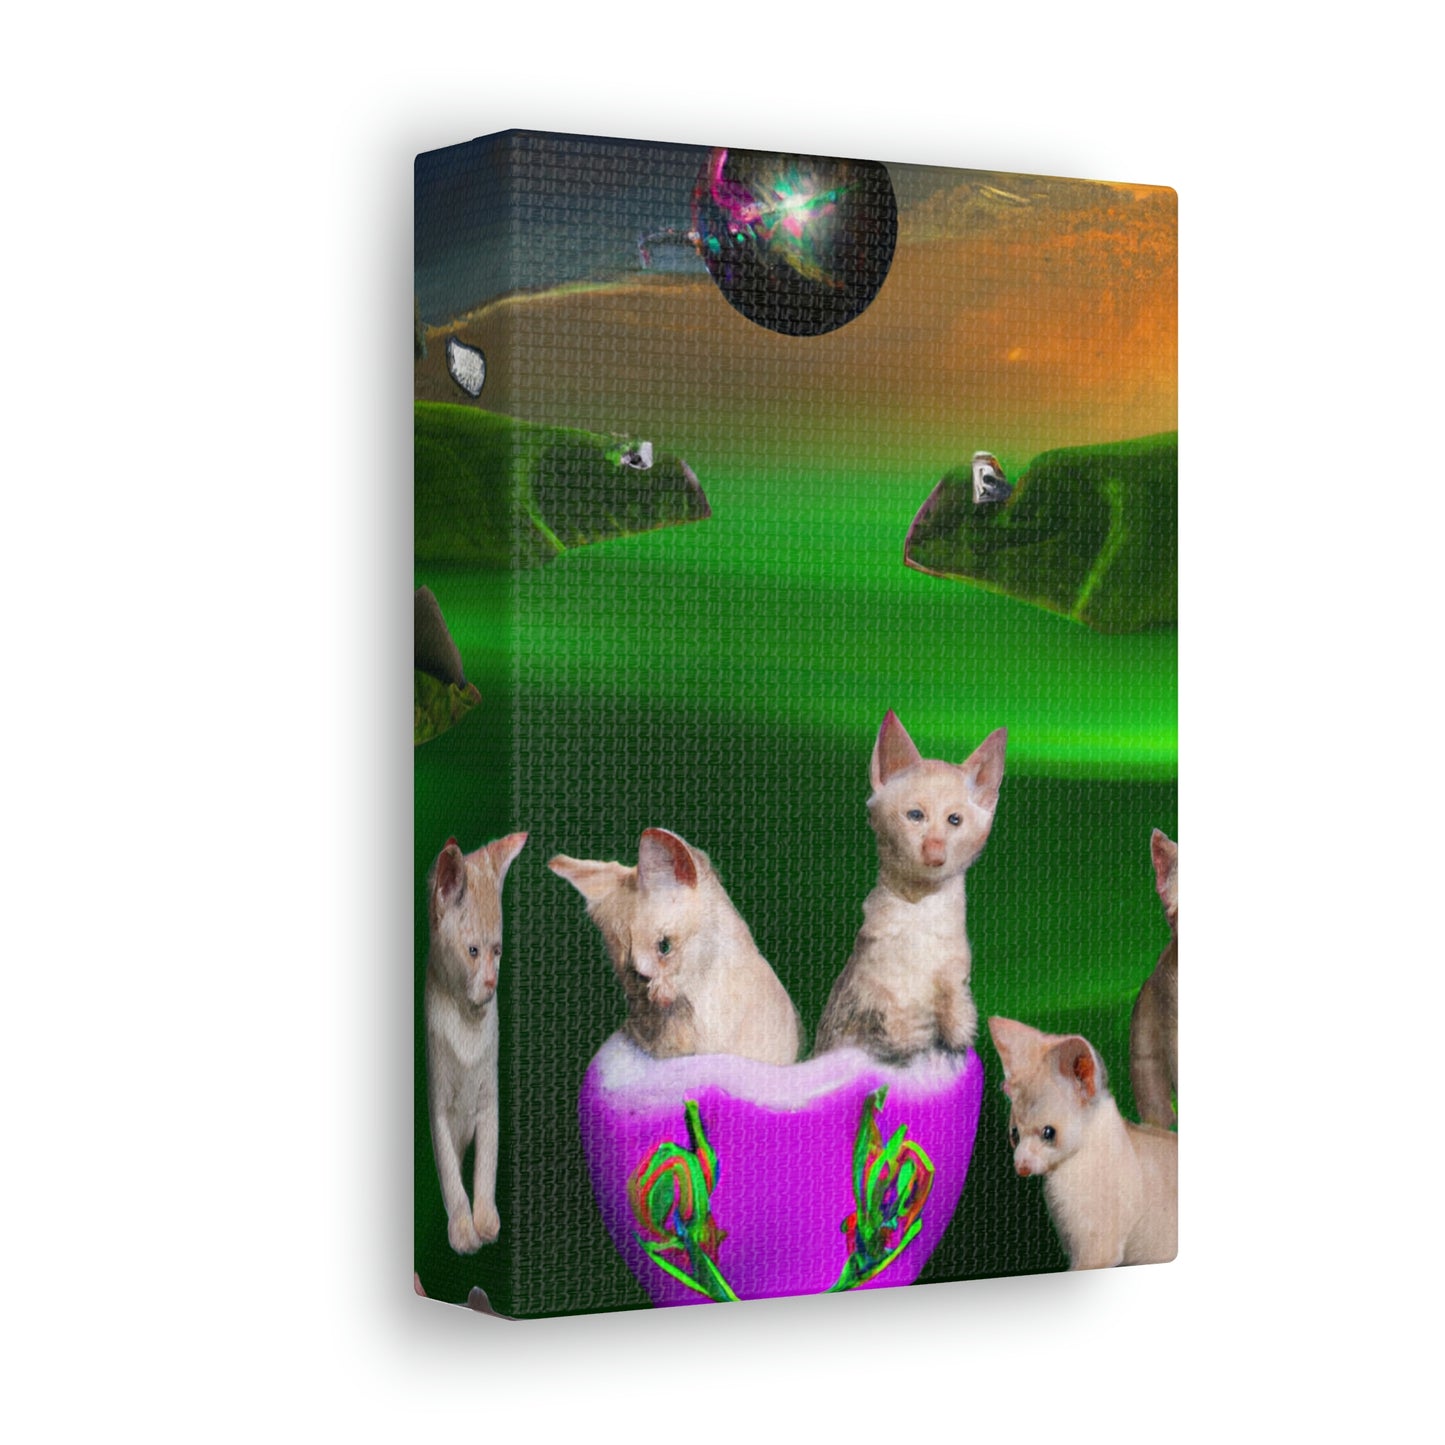 "The Feline Kingdom" - The Alien Canva